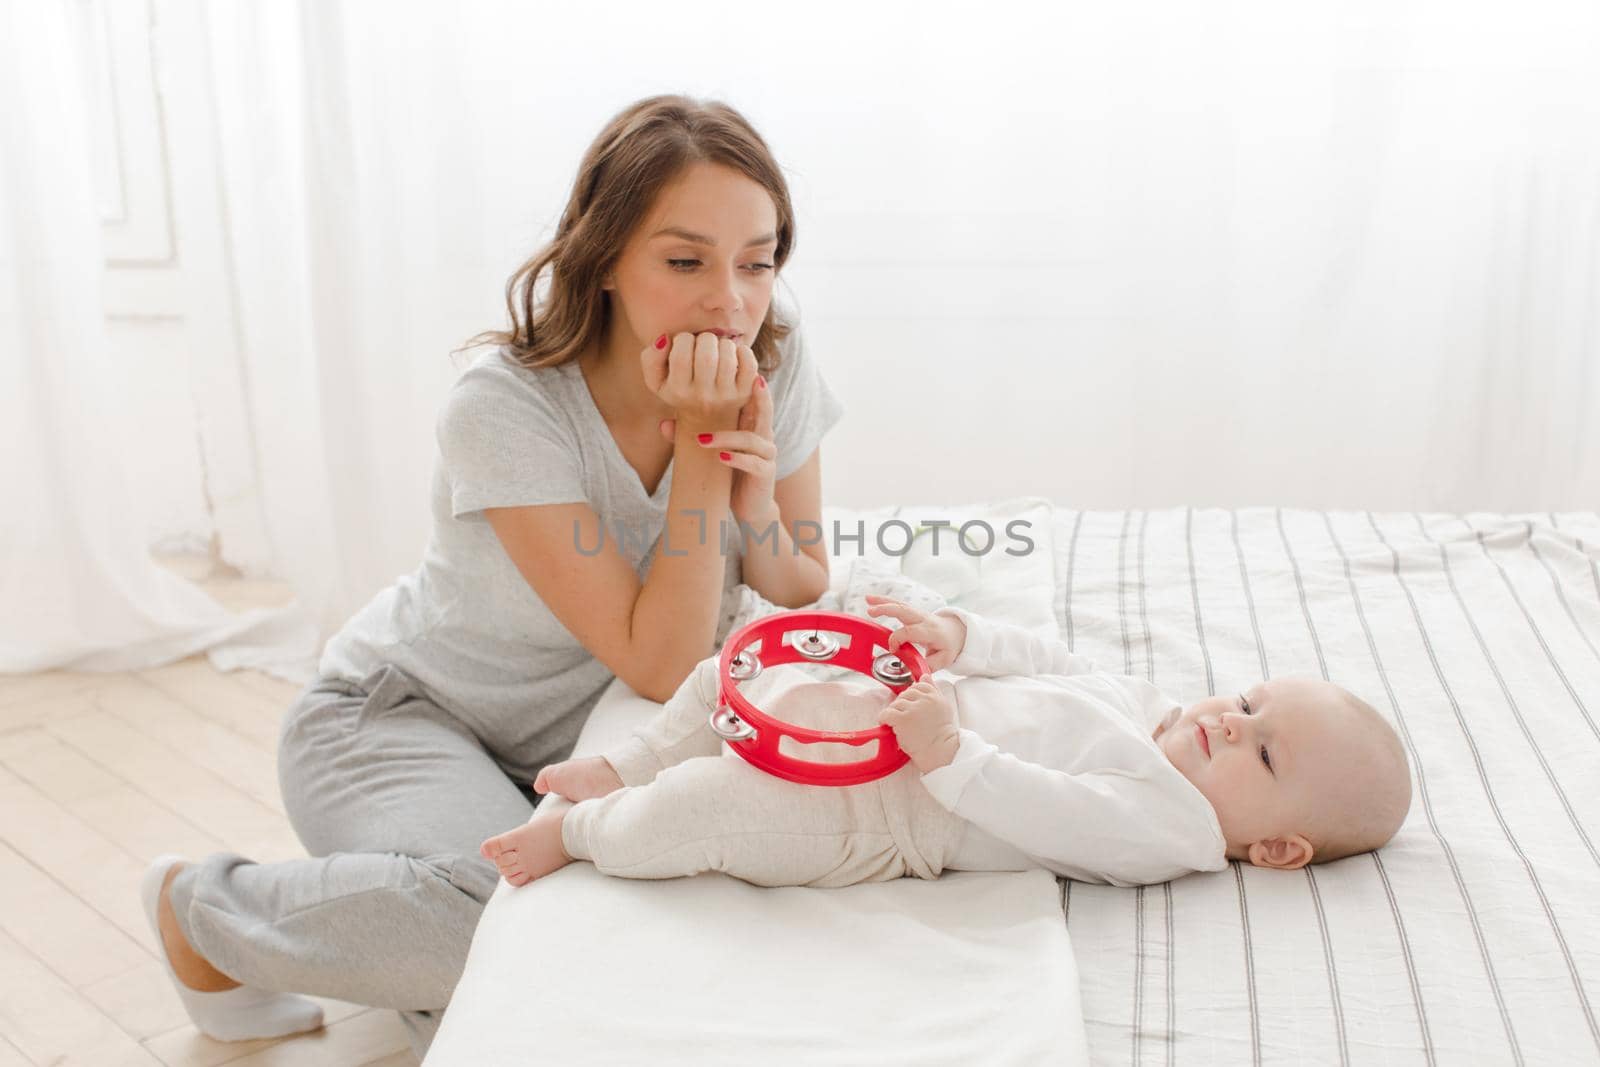 Pensive mother with baby in bedroom by Demkat